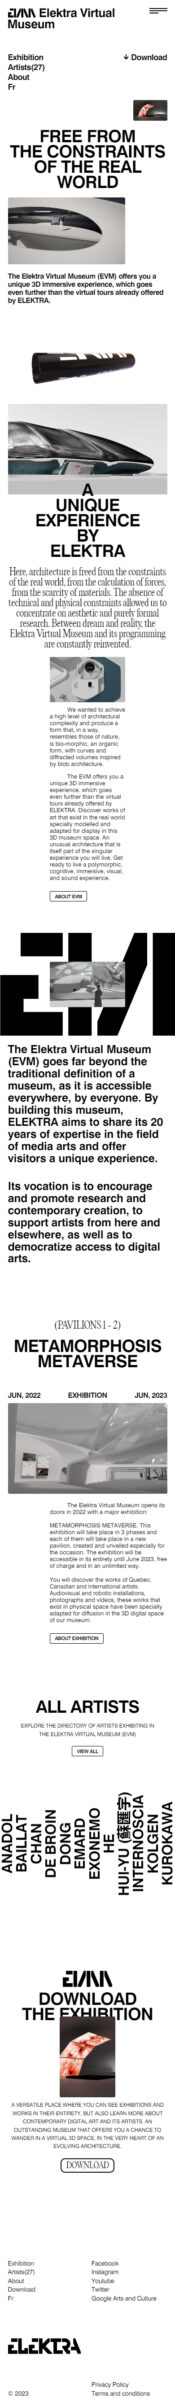 Elektra virtual museum